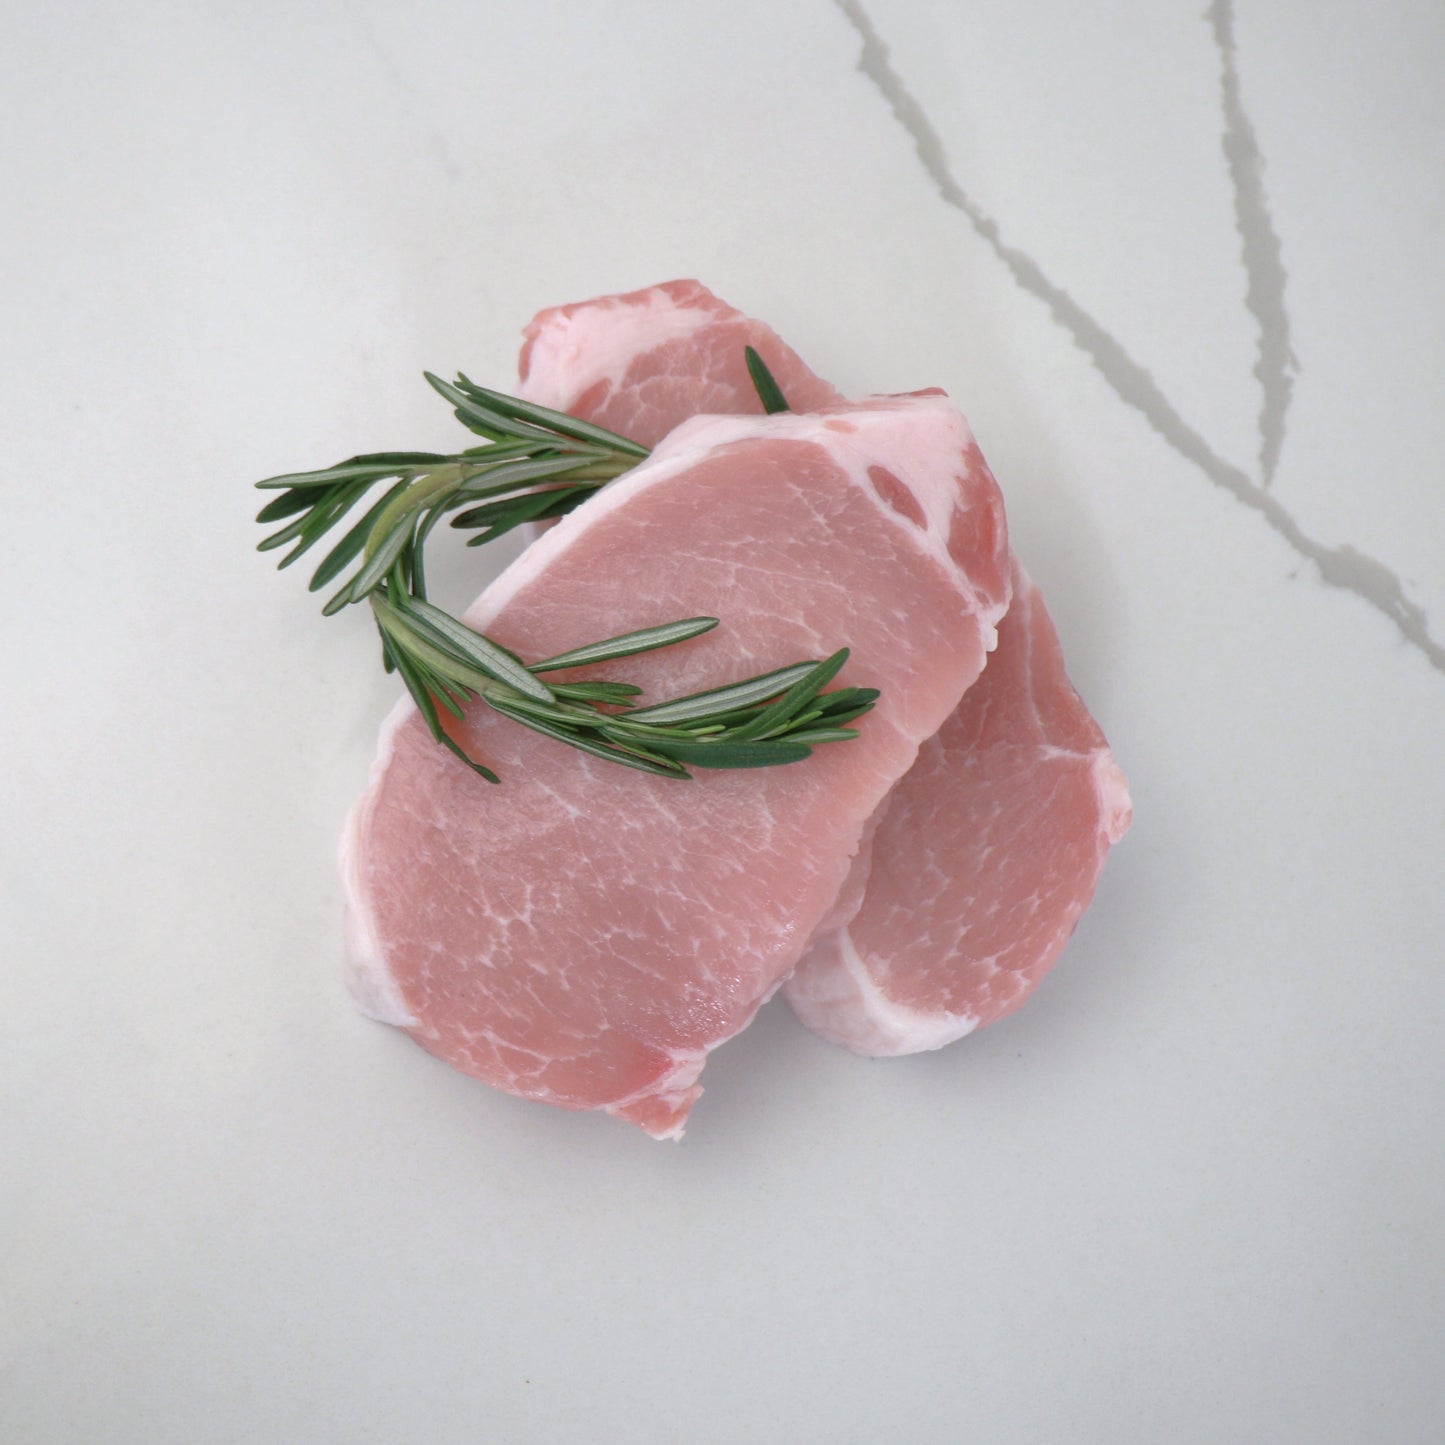 Boneless Center Cut Pork Chop (Per Pound)